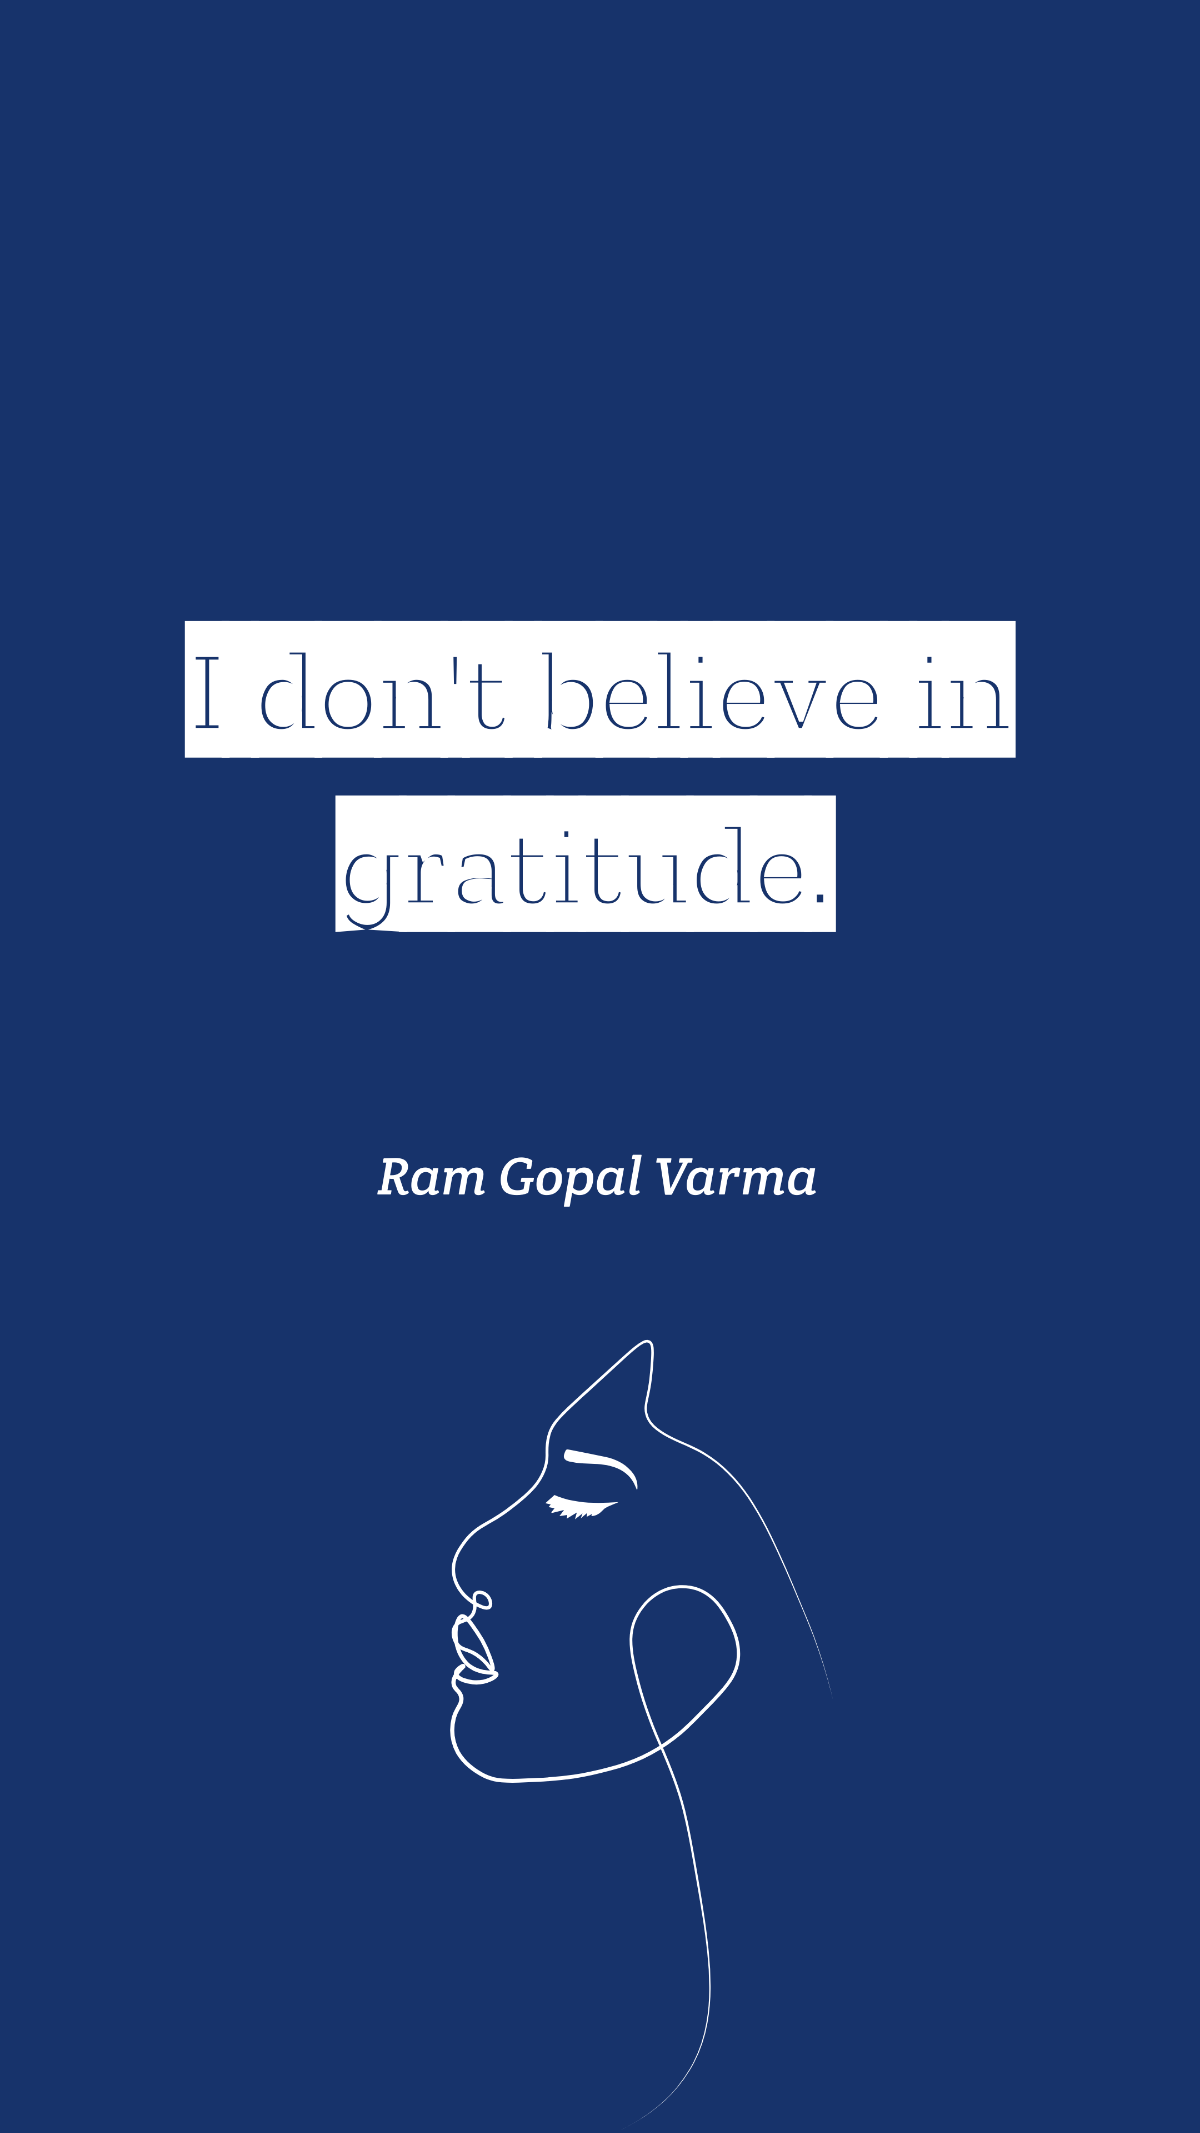 Ram Gopal Varma - I don't believe in gratitude. 